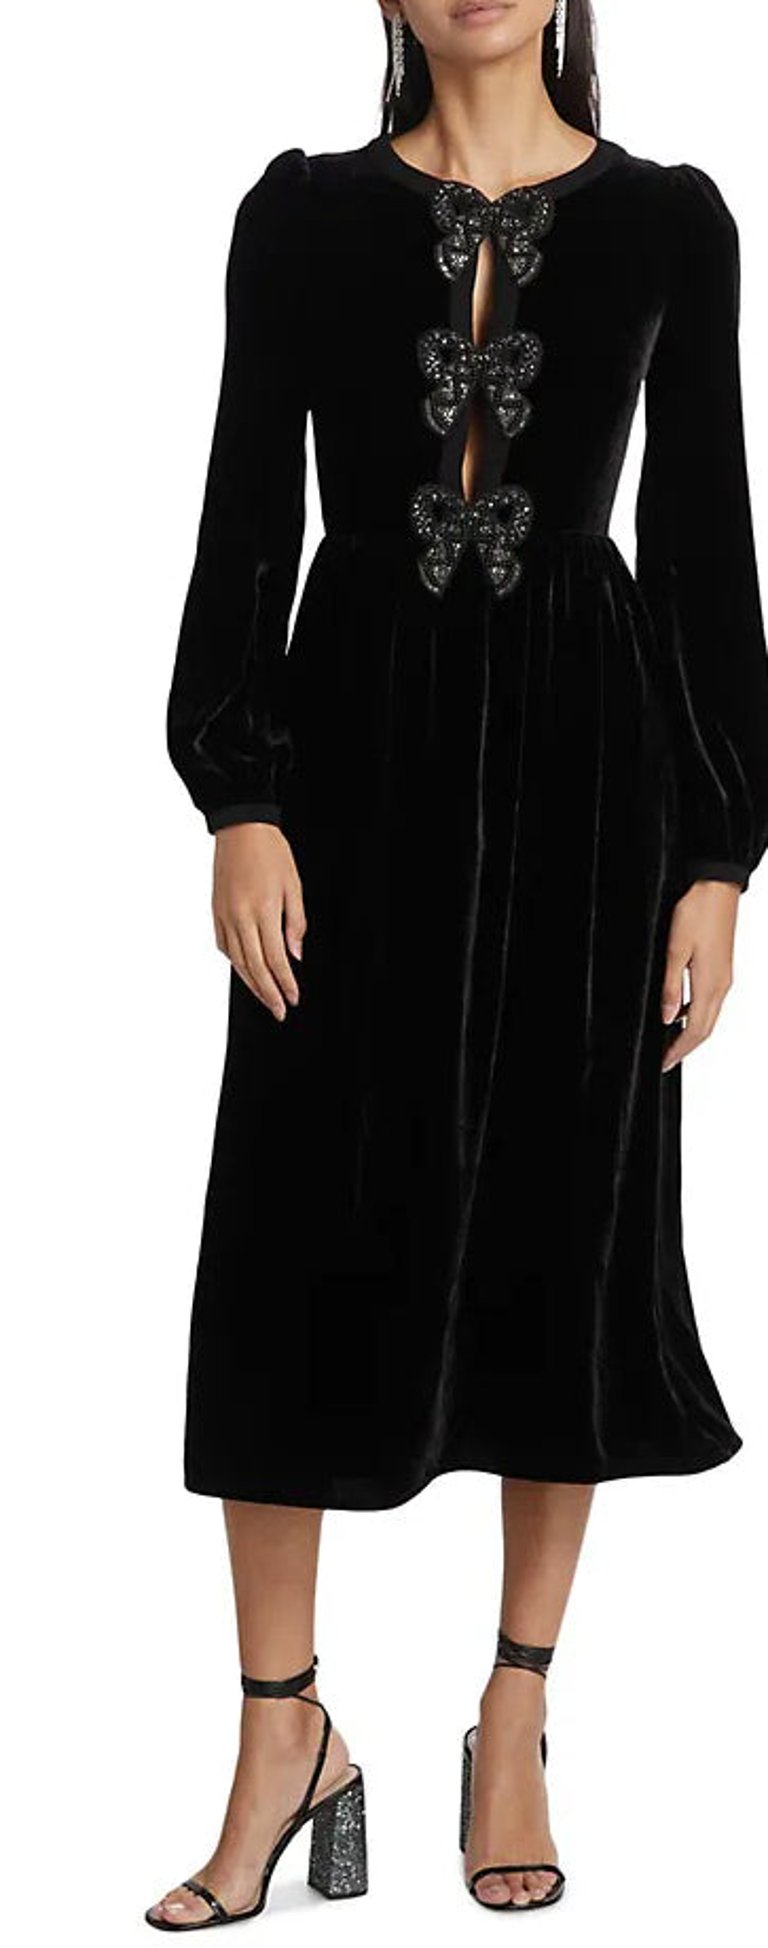 Women's Camille Bows Dress 10327 - Black